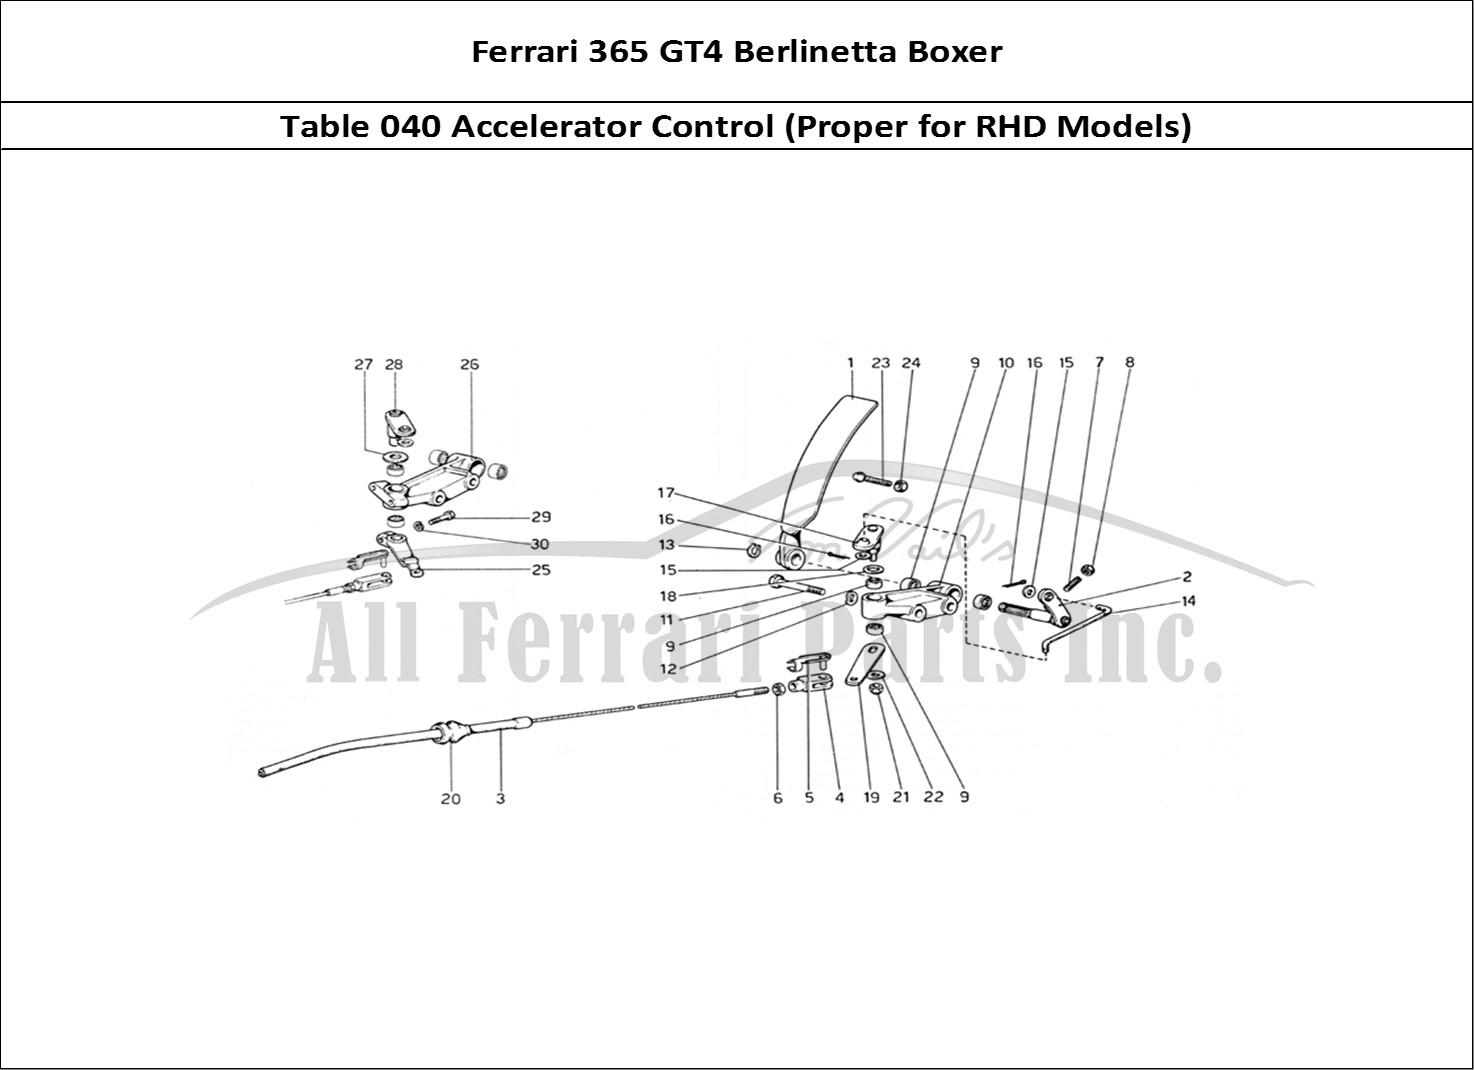 Ferrari Parts Ferrari 365 GT4 Berlinetta Boxer Page 040 Throttle Controll (Varian